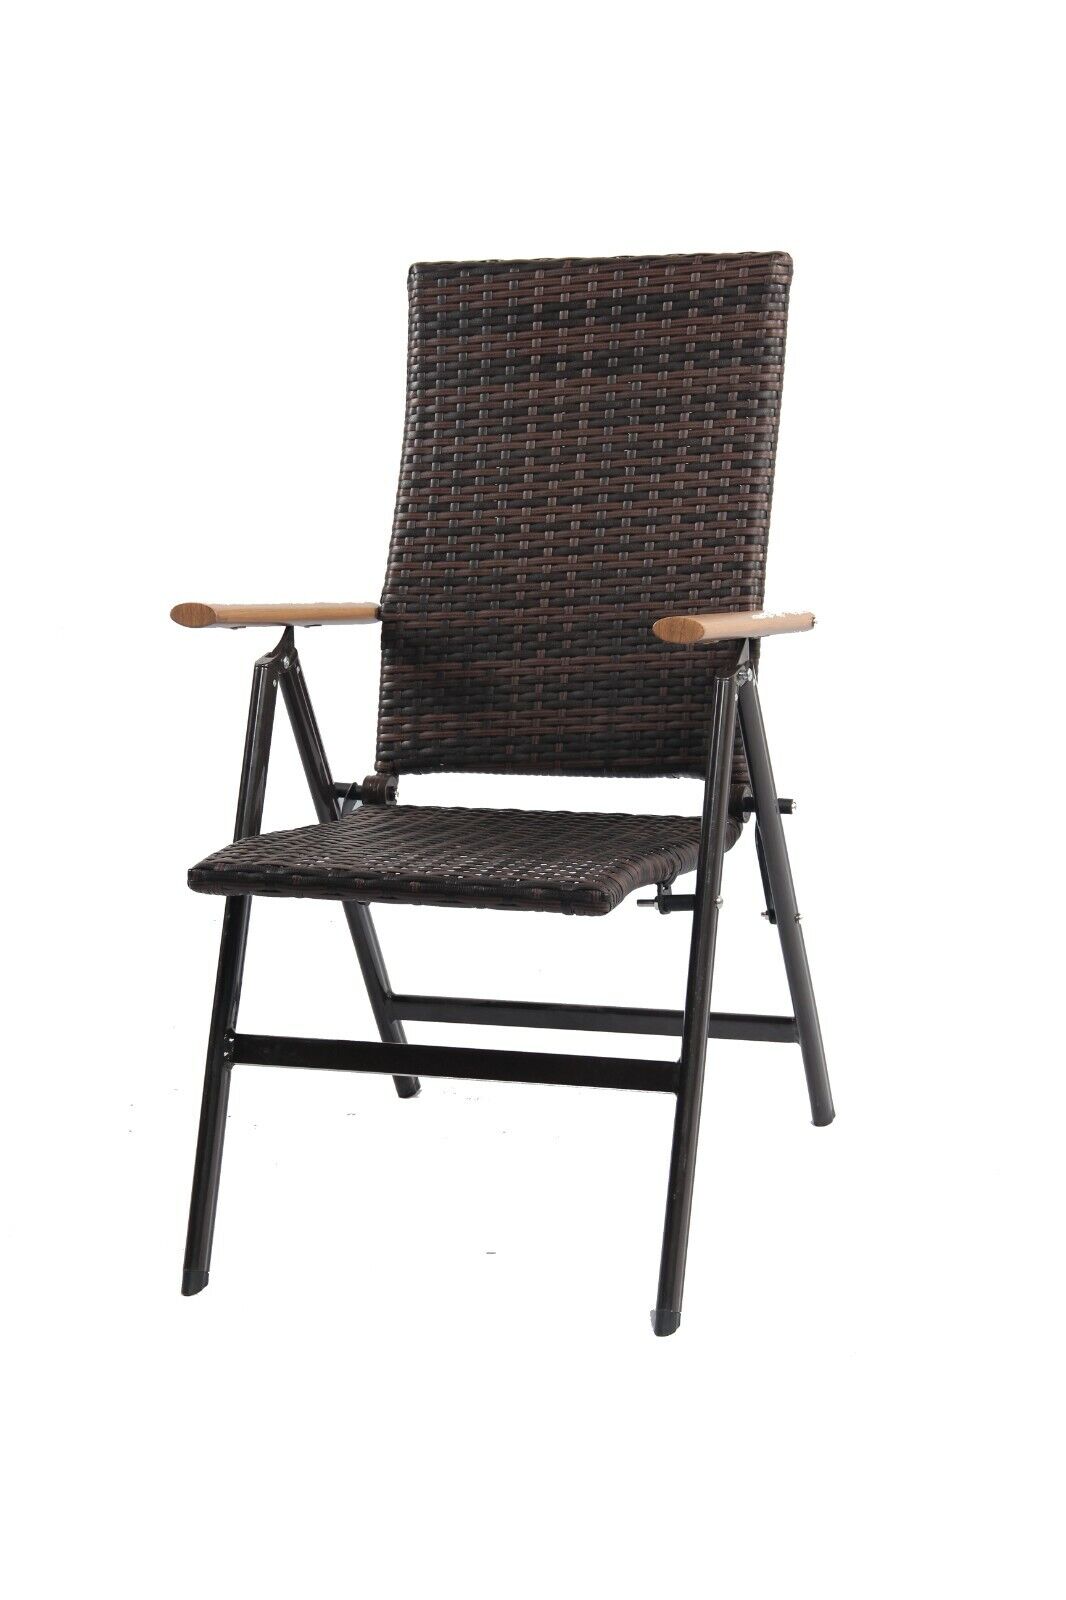 Folding Camping Chairs Picnic Fishing Deck Chair Beach Outdoor Seat Garden  Patio